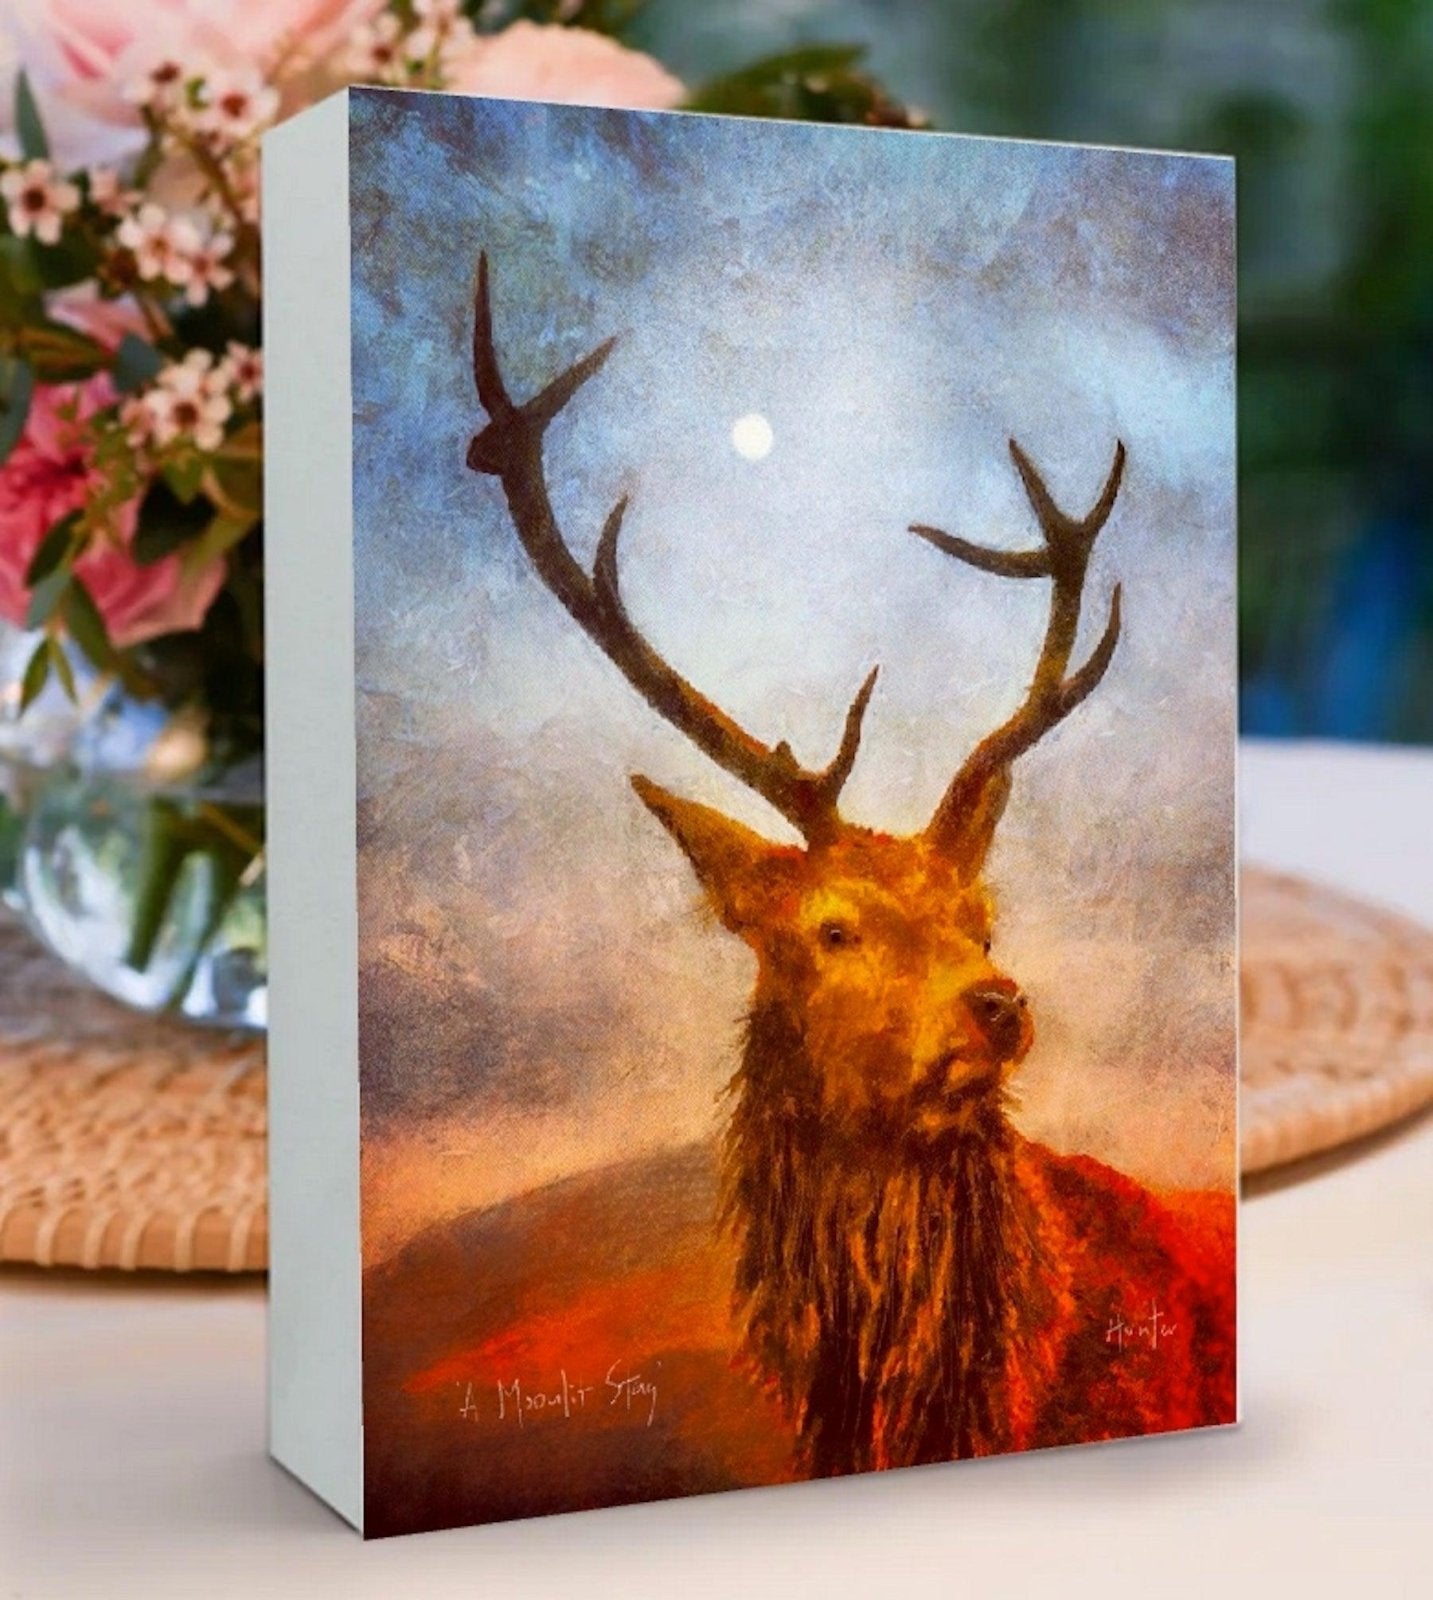 The Brooding Cuillin Skye Wooden Art Block-Wooden Art Blocks-Skye Art Gallery-Paintings, Prints, Homeware, Art Gifts From Scotland By Scottish Artist Kevin Hunter